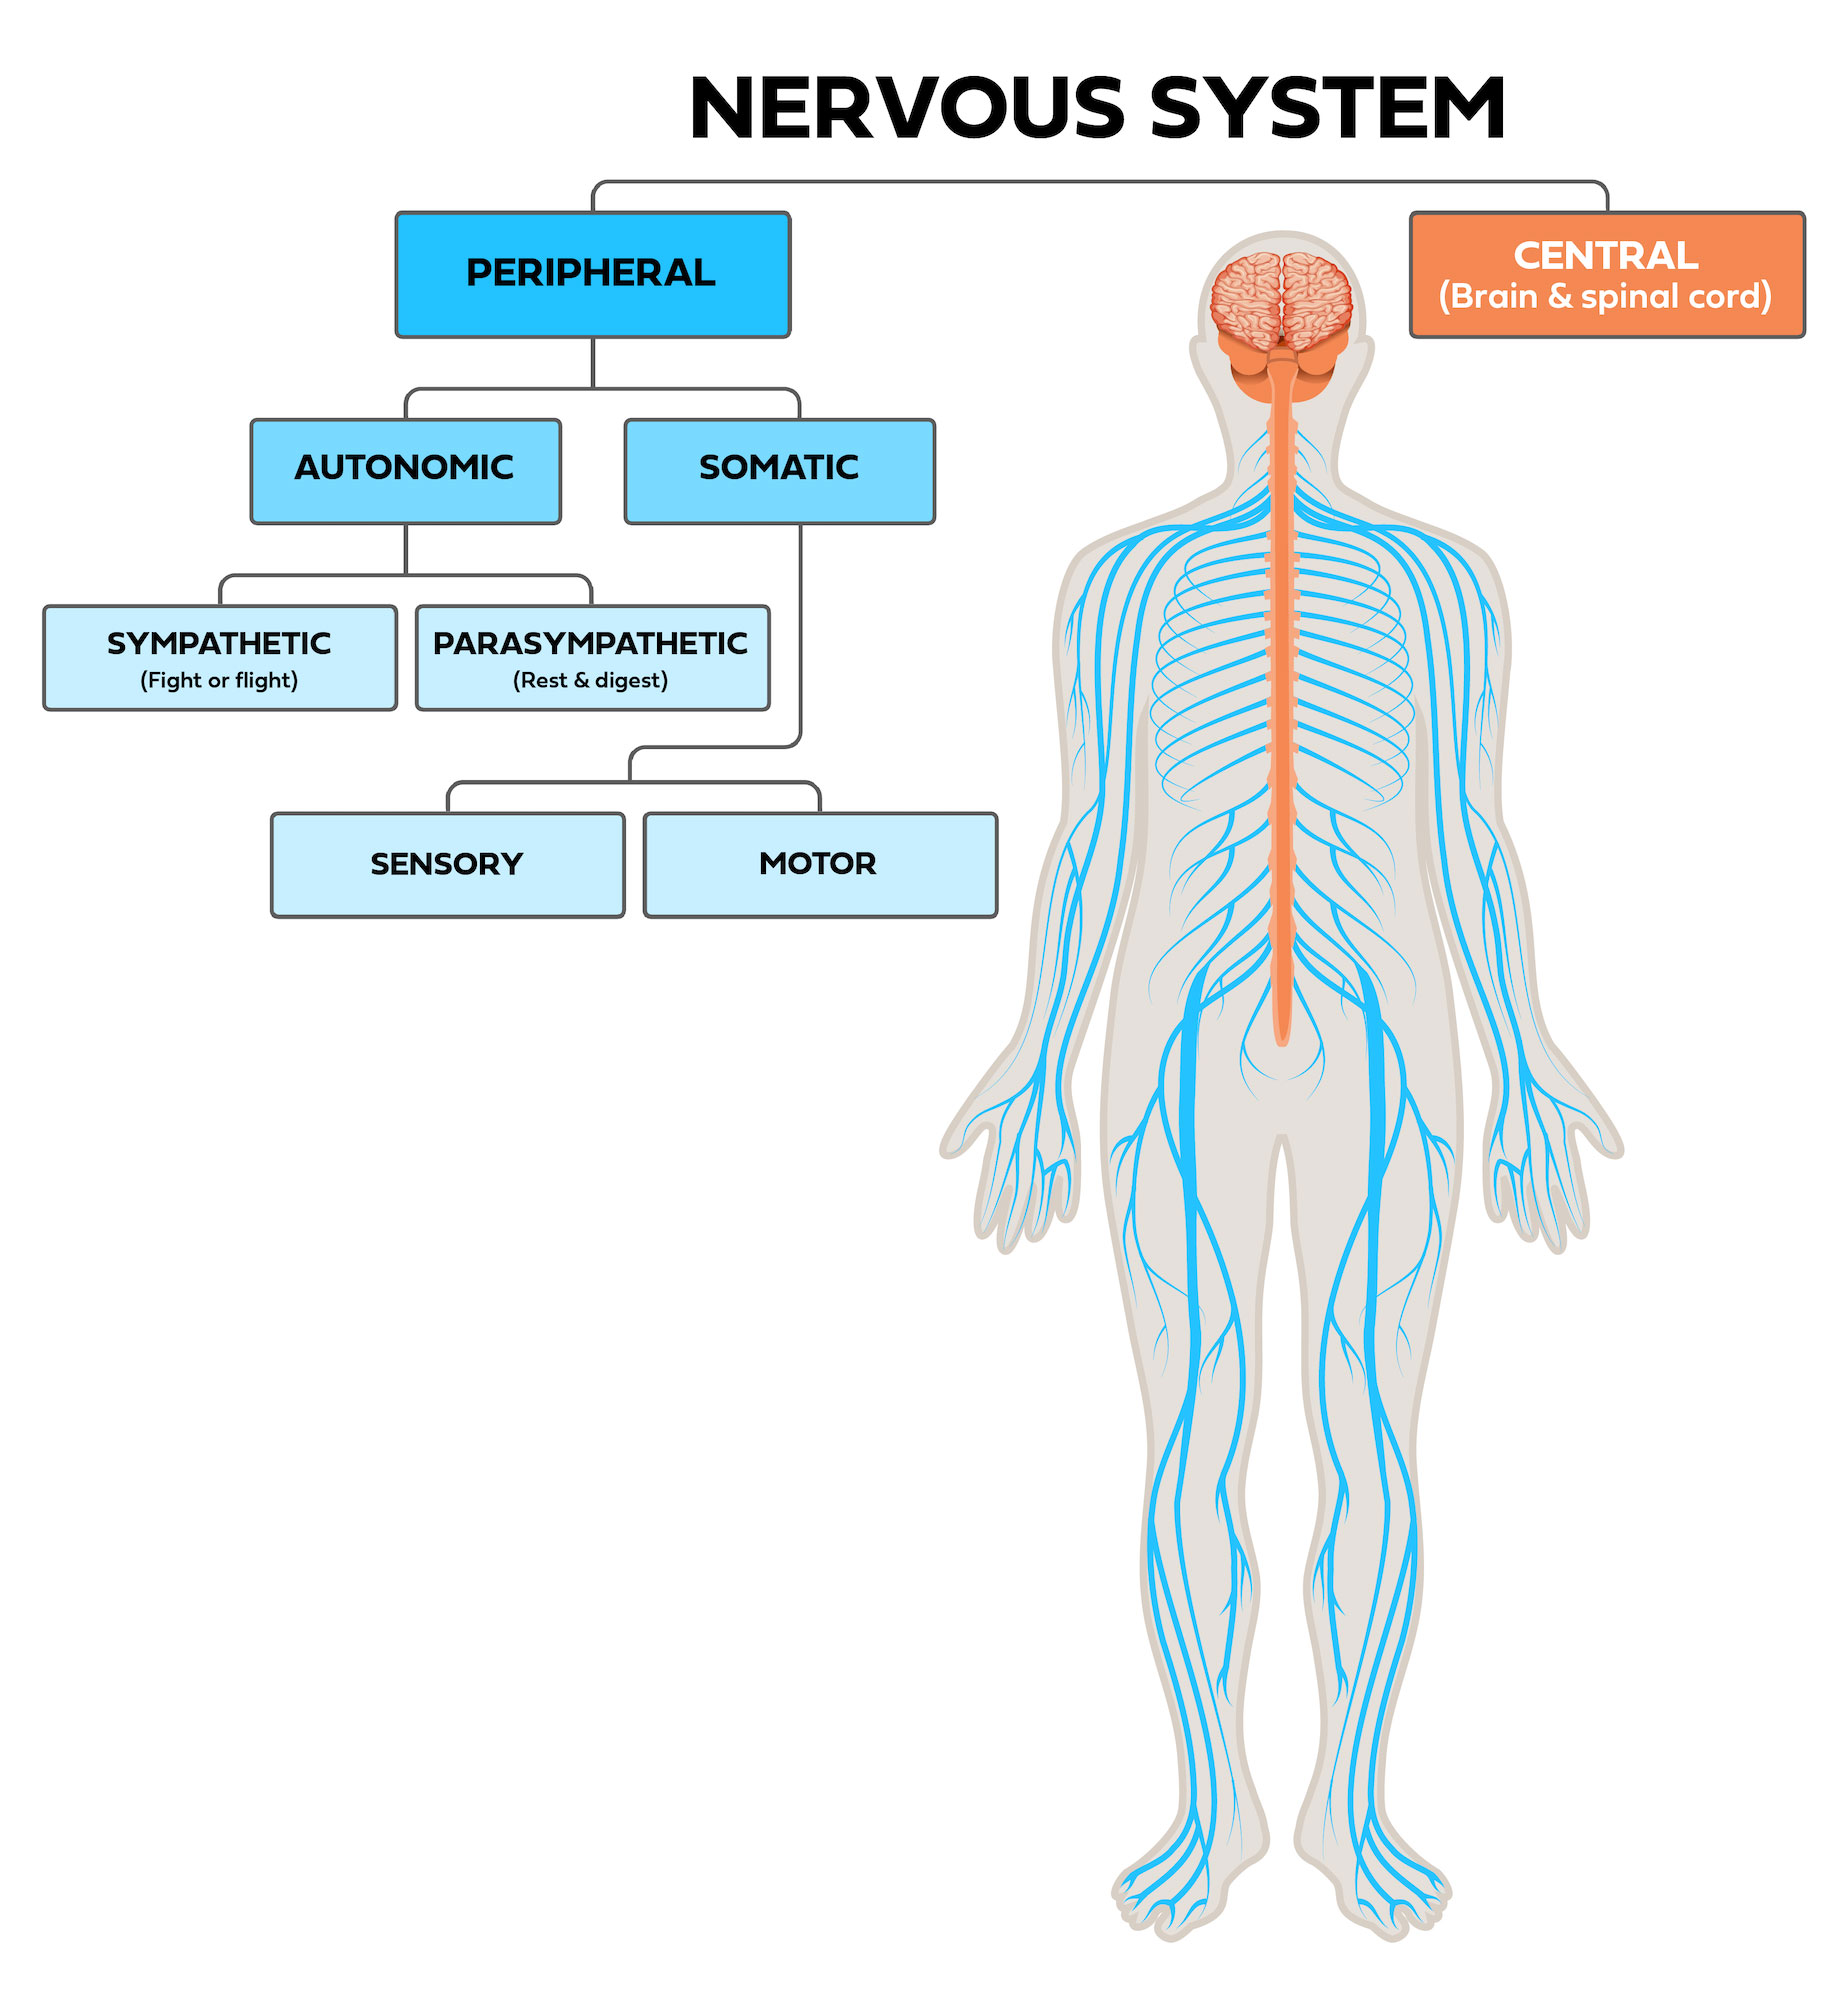 Nervous system •Central (brain & spinal cord) •Peripheral oSomatic Sensory Motor oAutonomic Sympathetic (fight or flight) Parasympathetic (rest & digest)